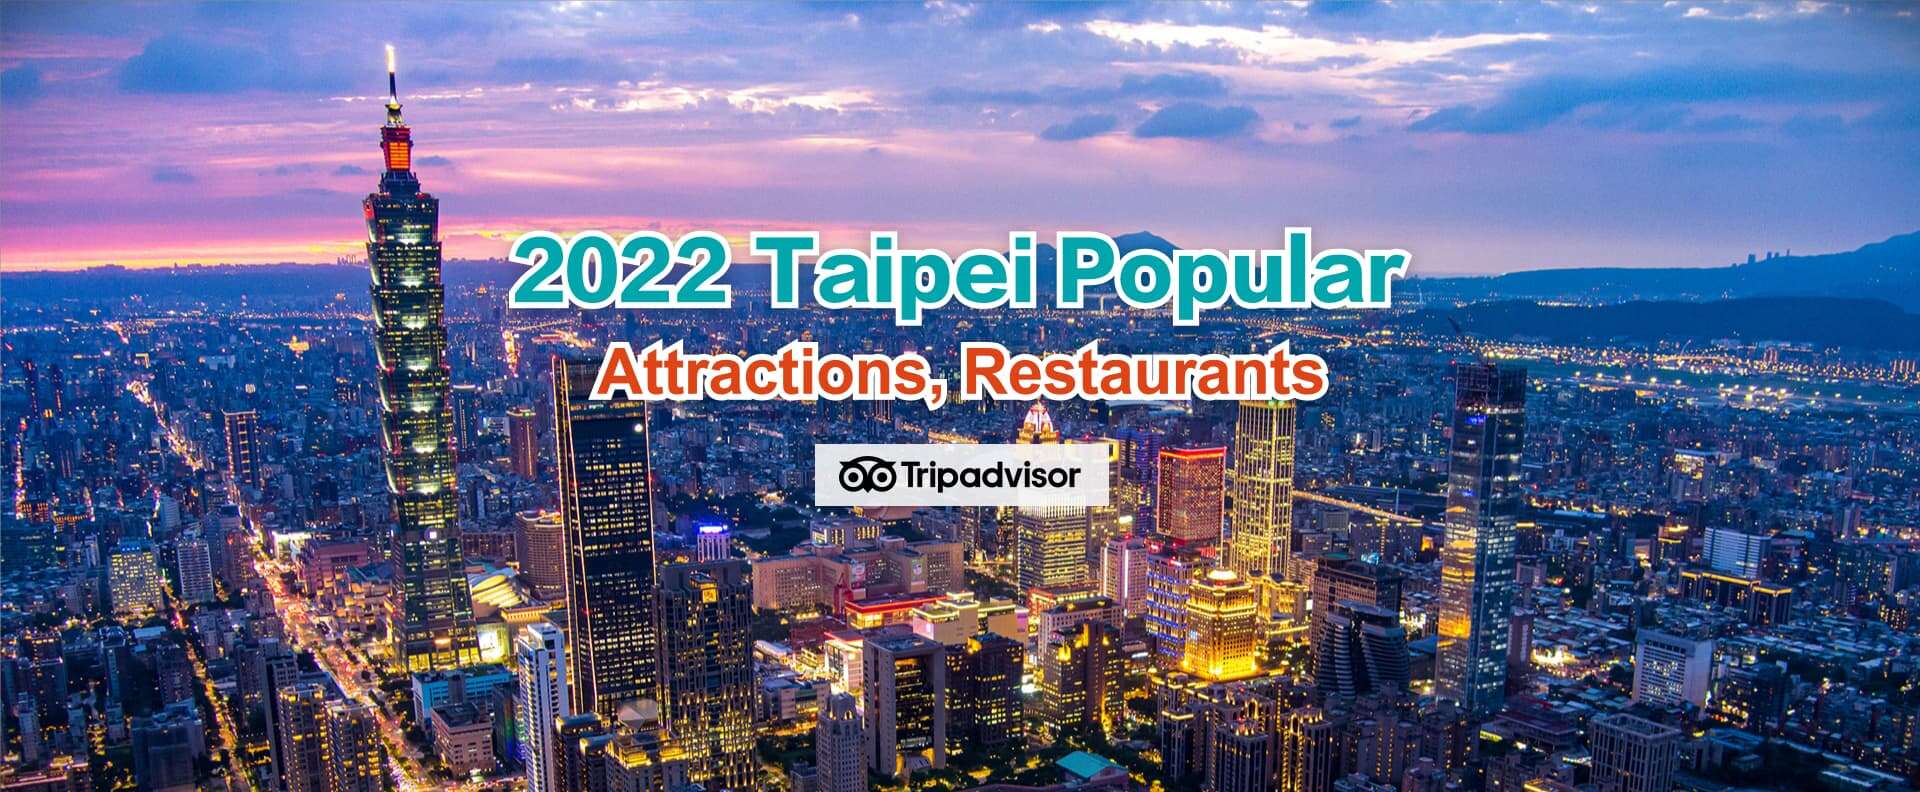 2022 Taipei Popular attractions,restaurants